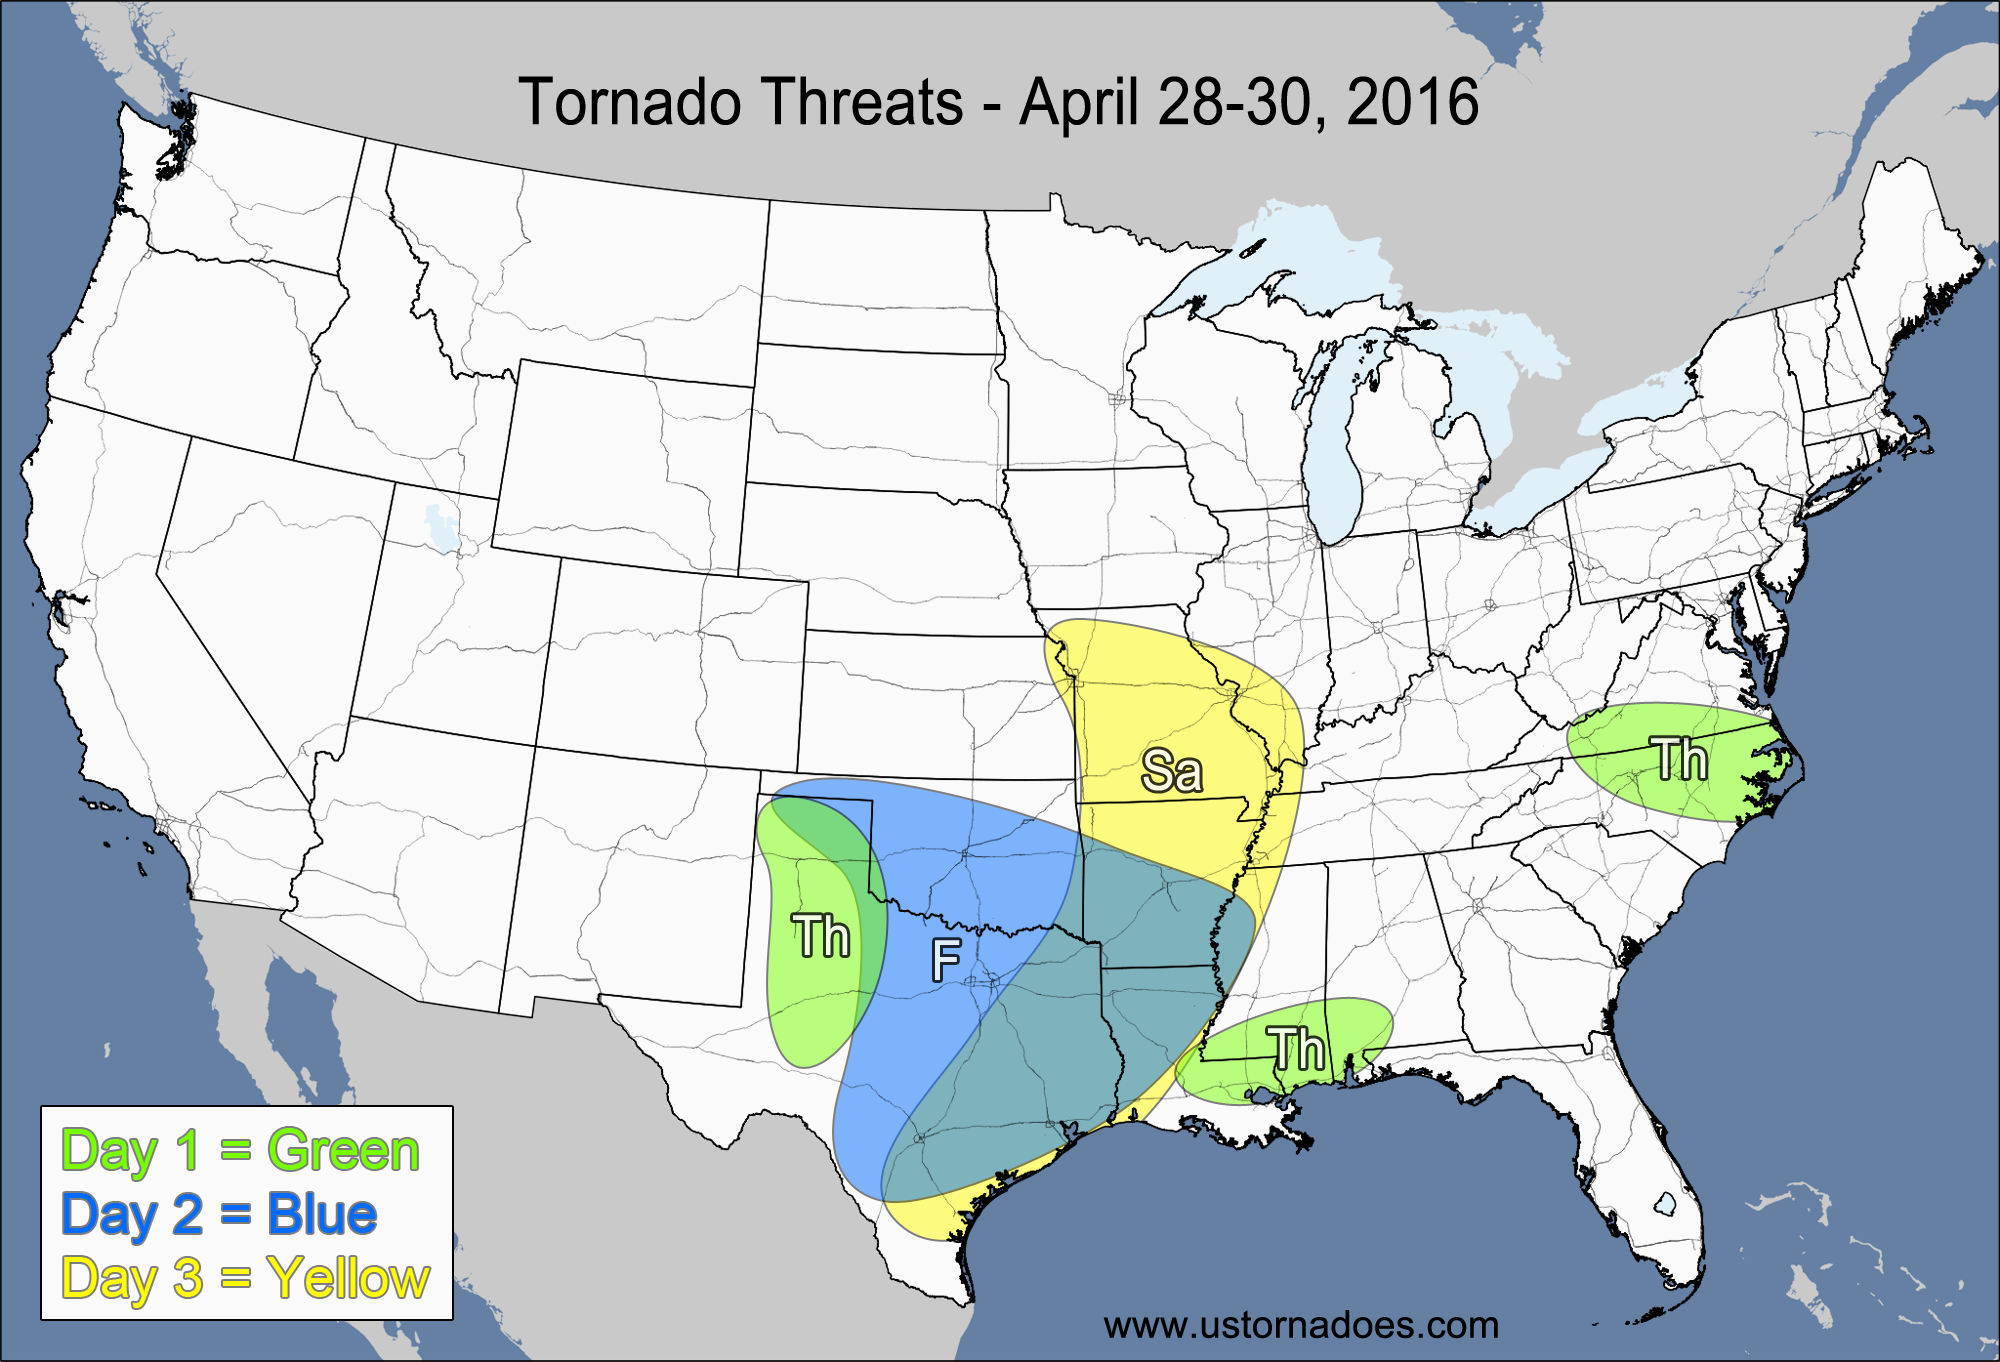 Tornado Threat Forecast: April 28-May 4, 2016